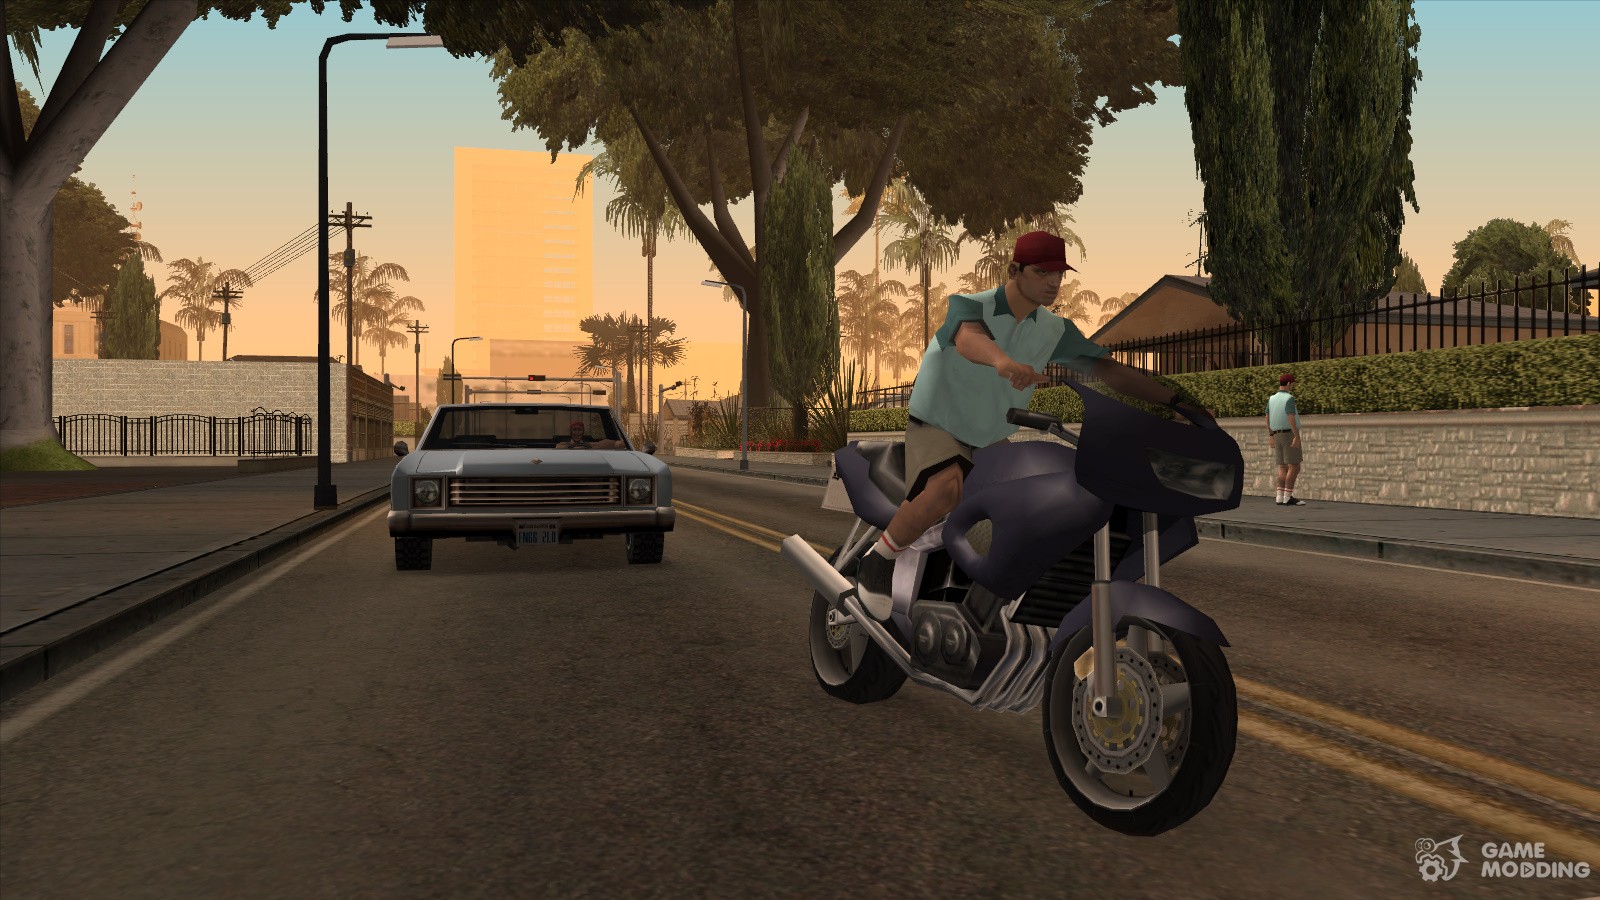 GTA San Andreas Mobile PS2 + Fixes Mod 